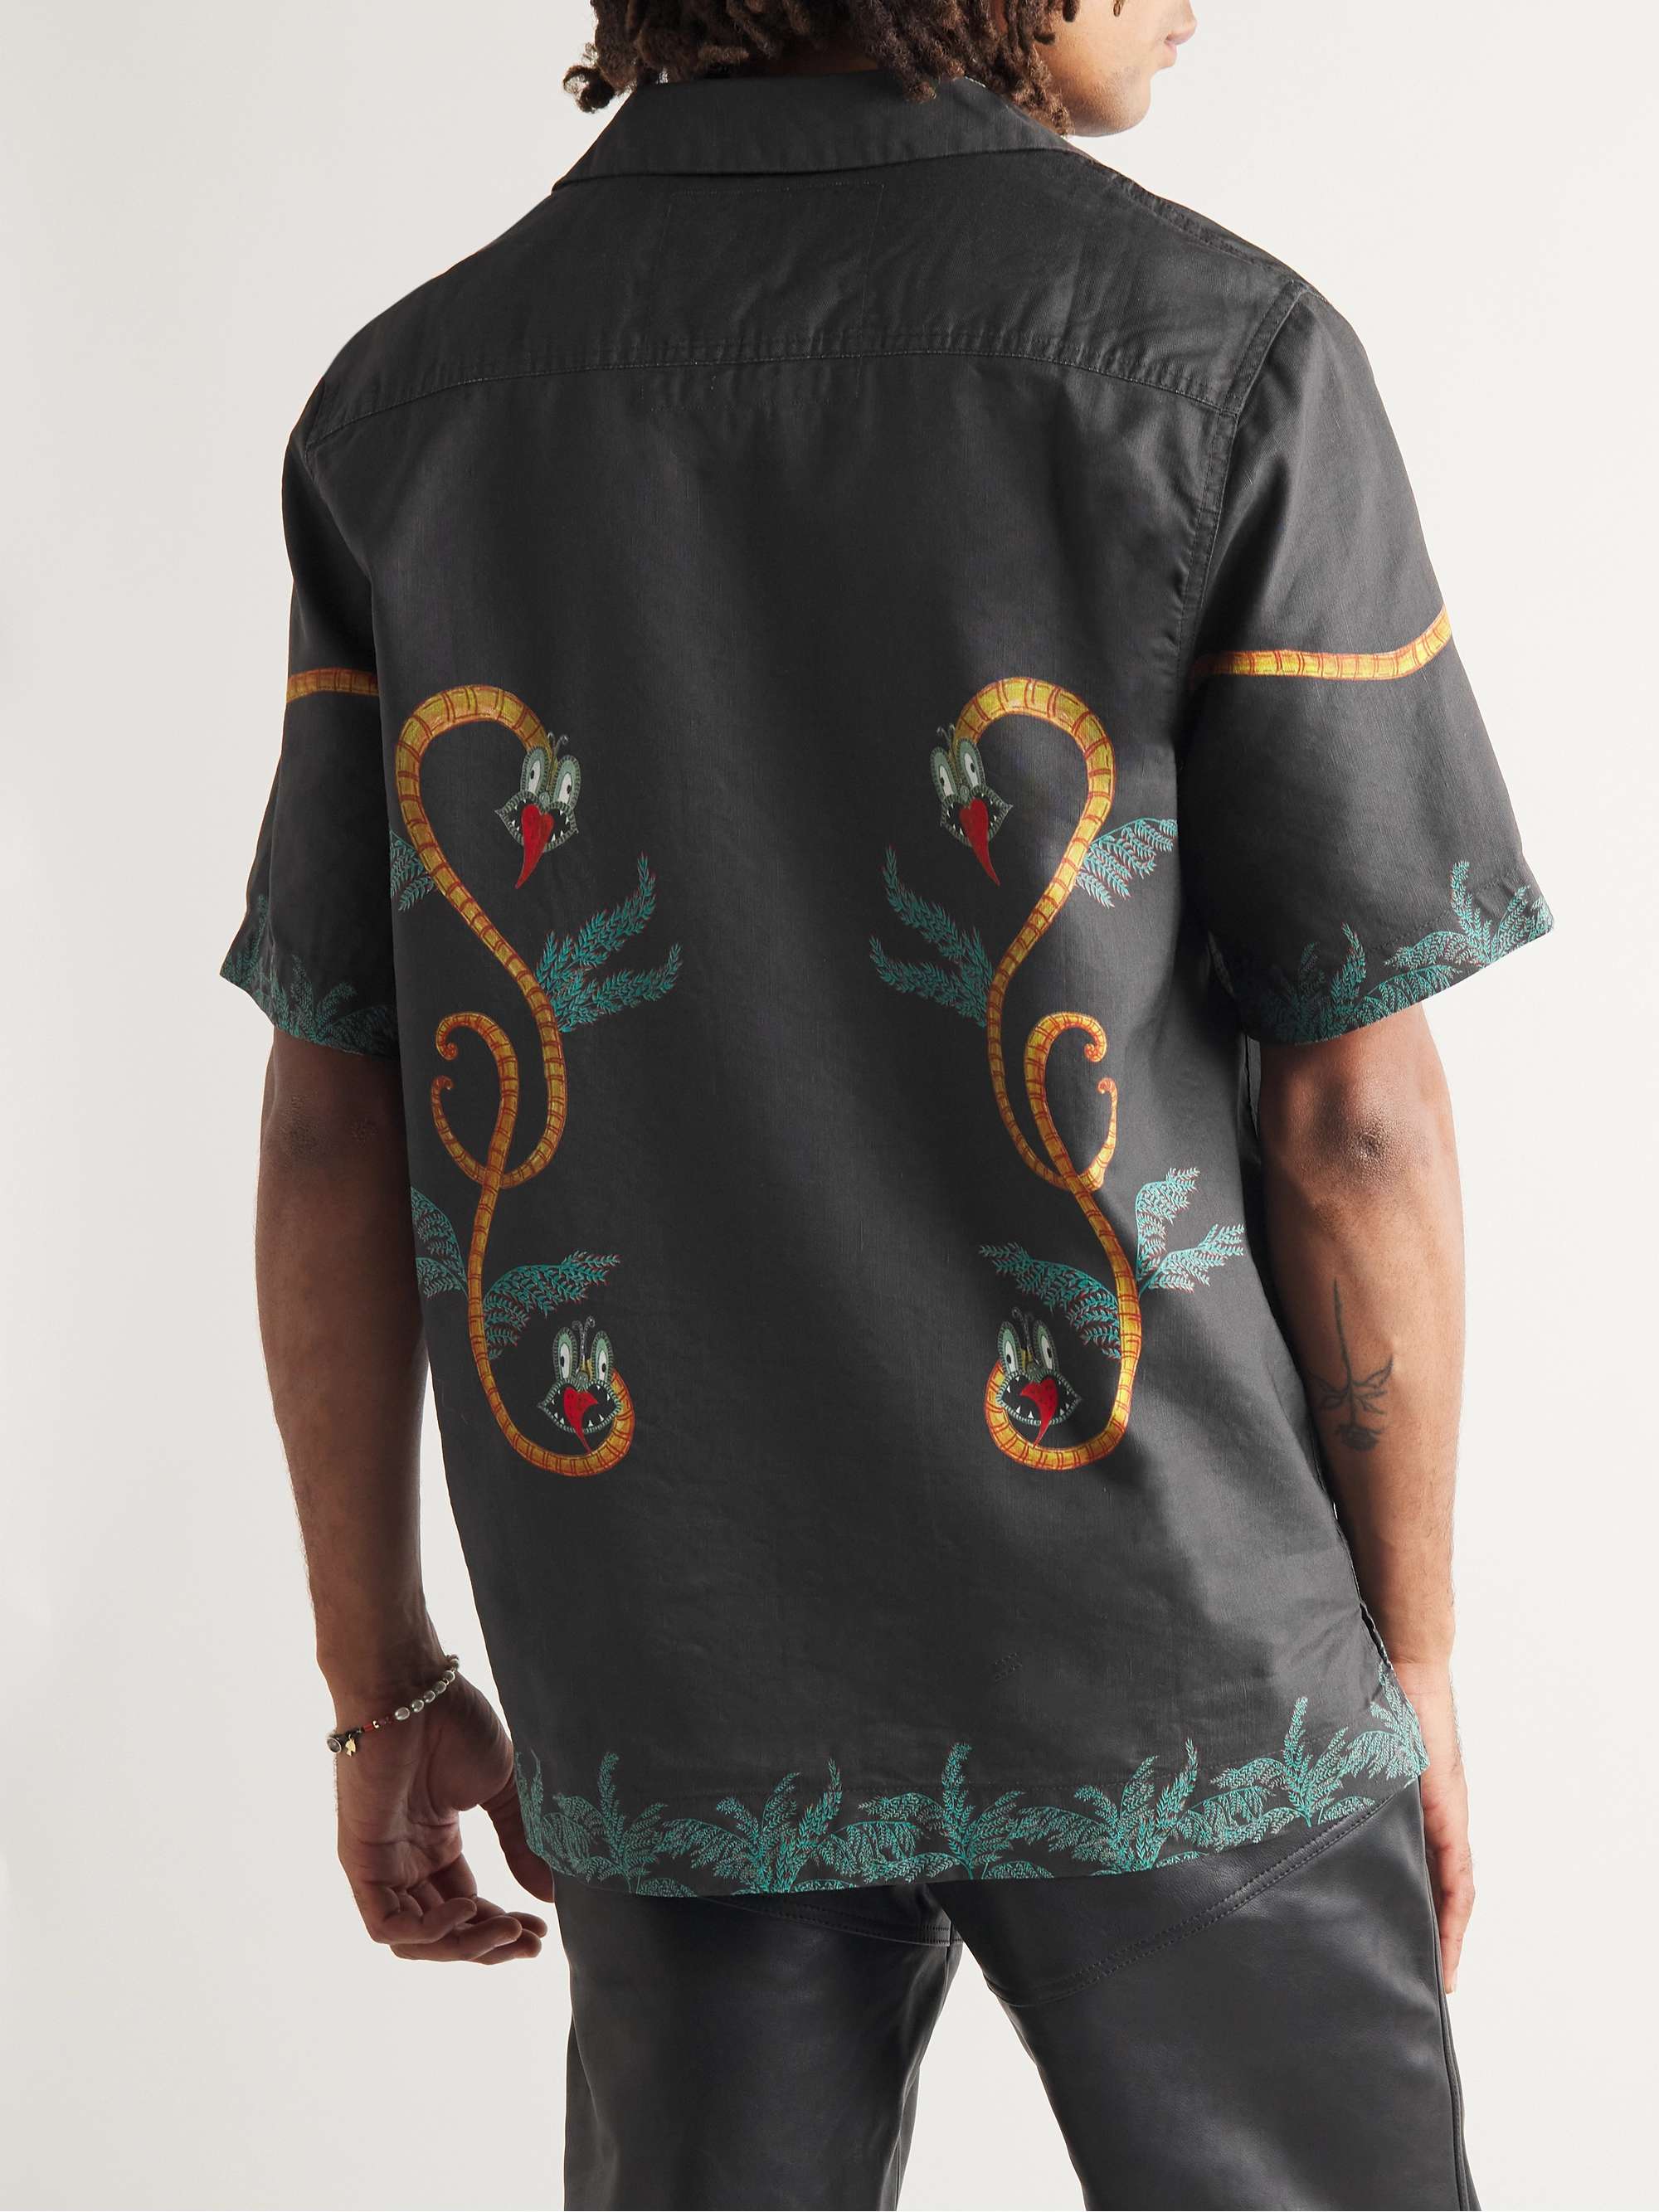 MANAAKI Taniwha Camp-Collar Printed Lyocell and Linen-Blend Shirt